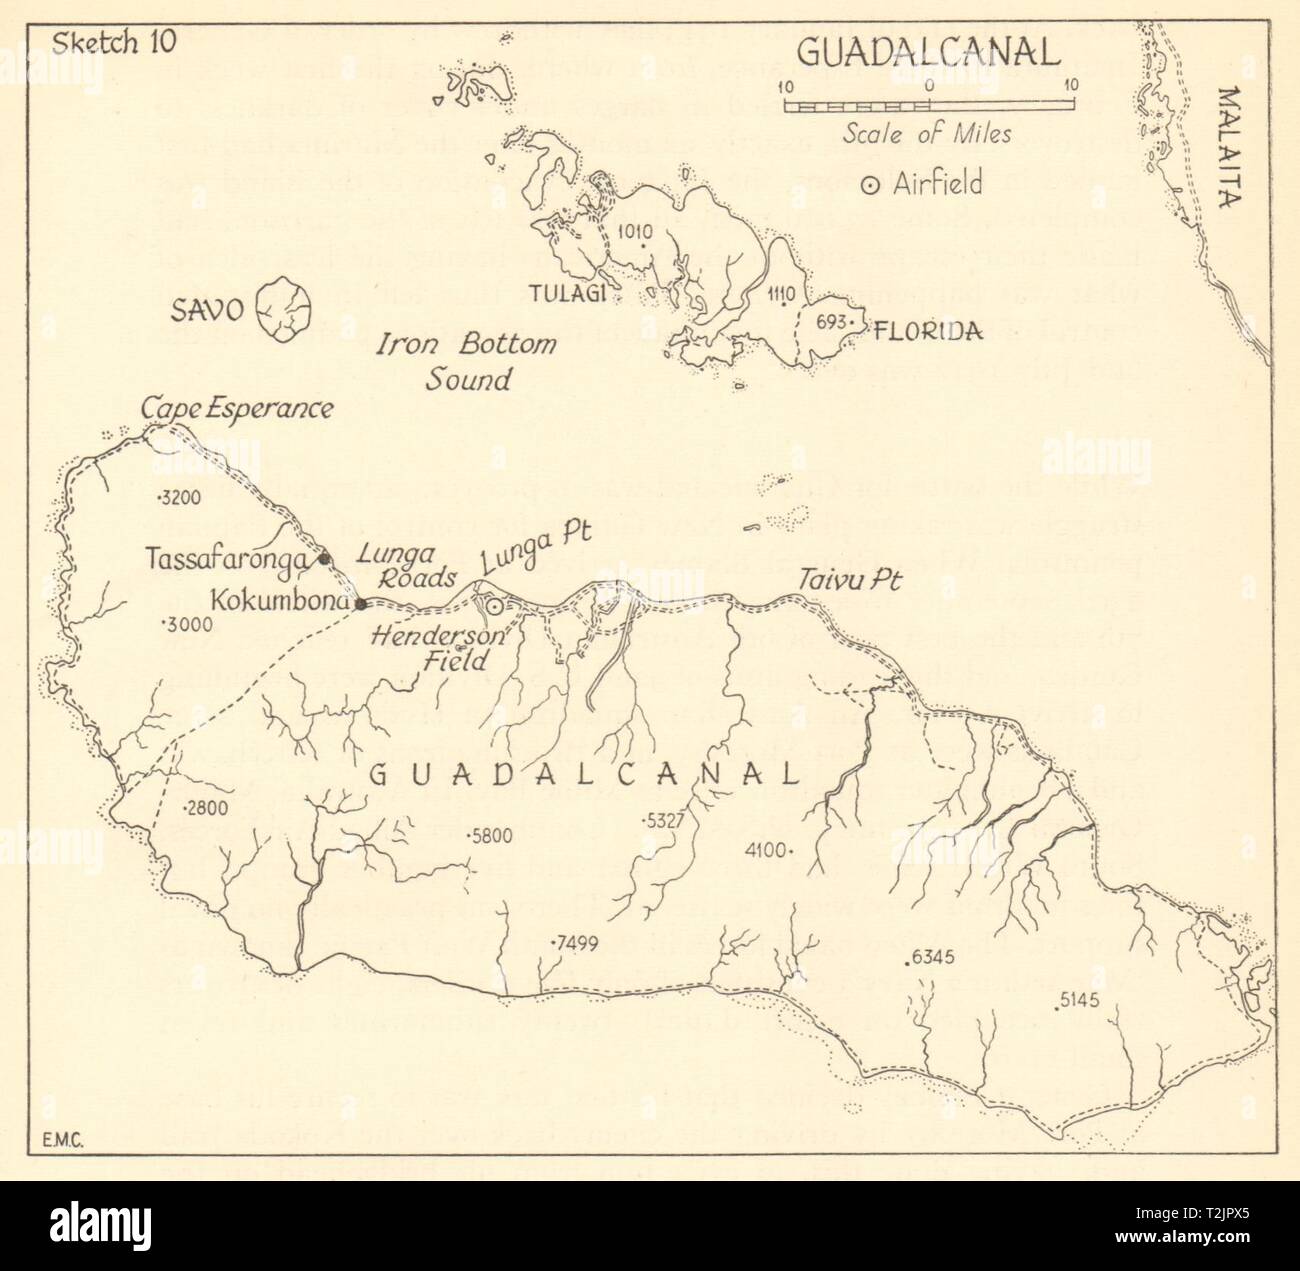 Guadalcanal Campaign Map